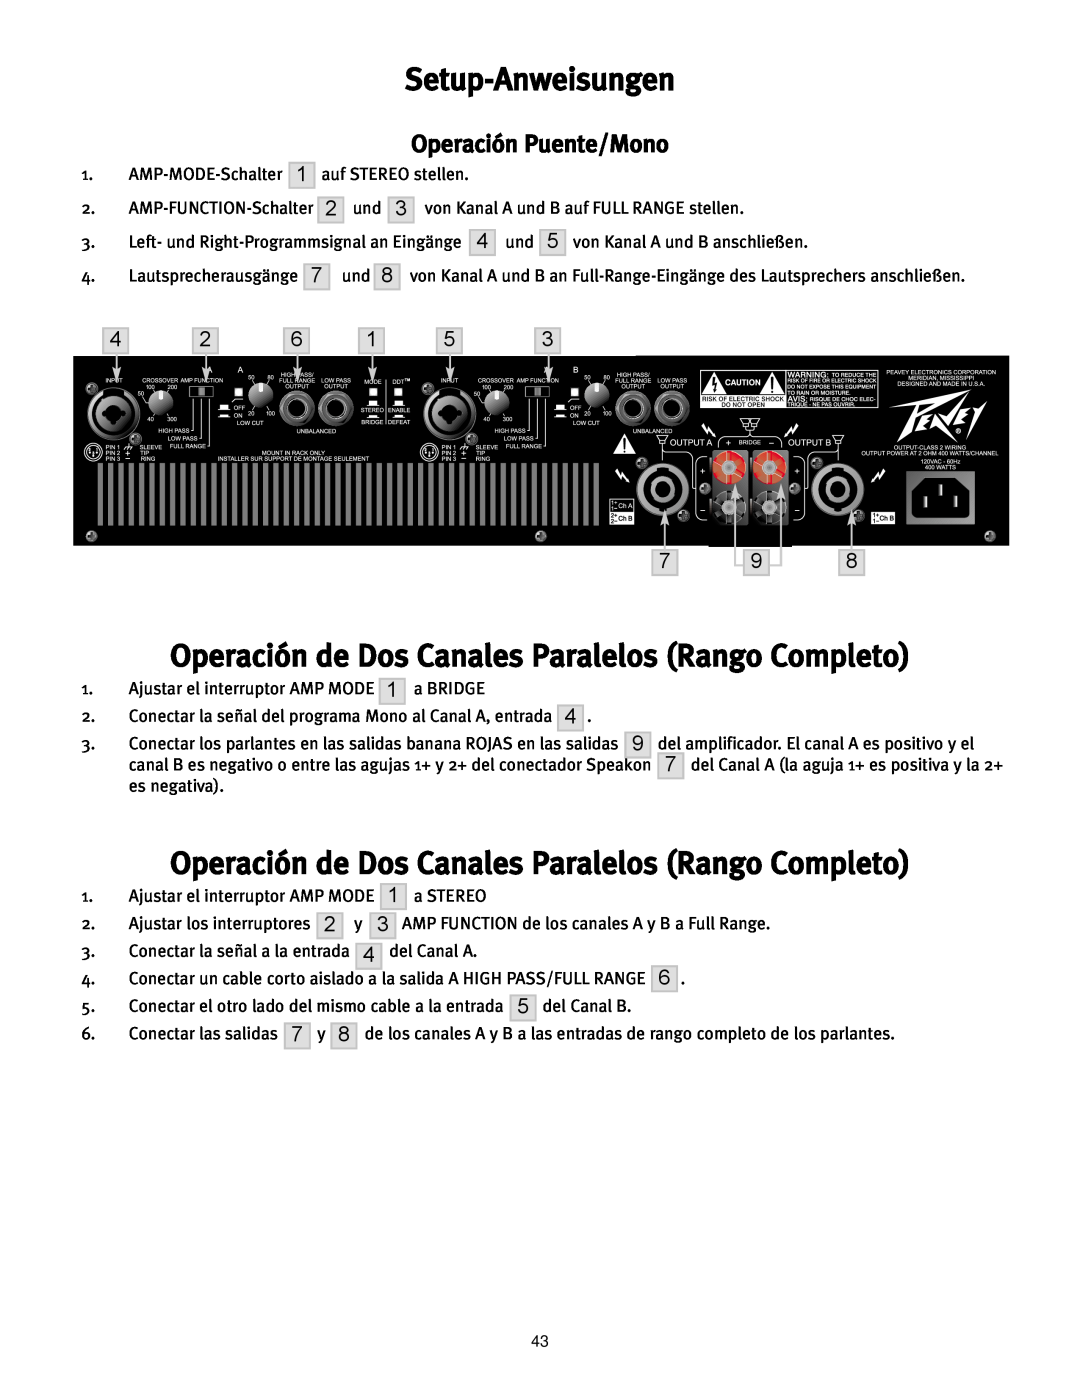 Peavey CS 800H manual Operación de Dos Canales Paralelos Rango Completo, Operación Puente/Mono, Setup-Anweisungen 